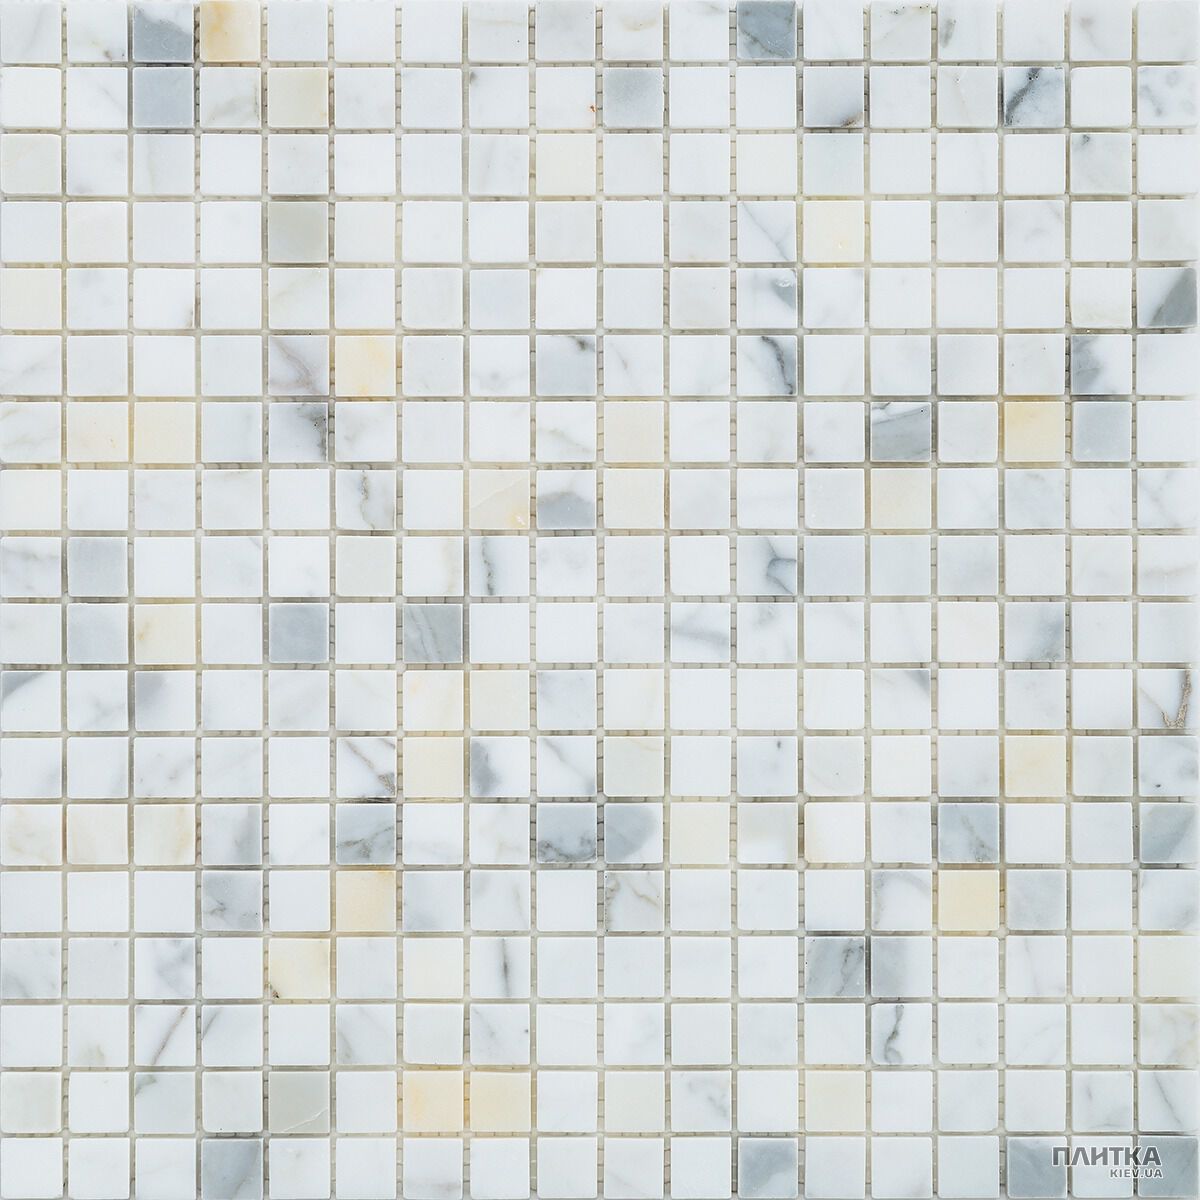 Мозаика Mozaico de Lux C-MOS C-MOS CALACATTA GOLD POL белый,серый